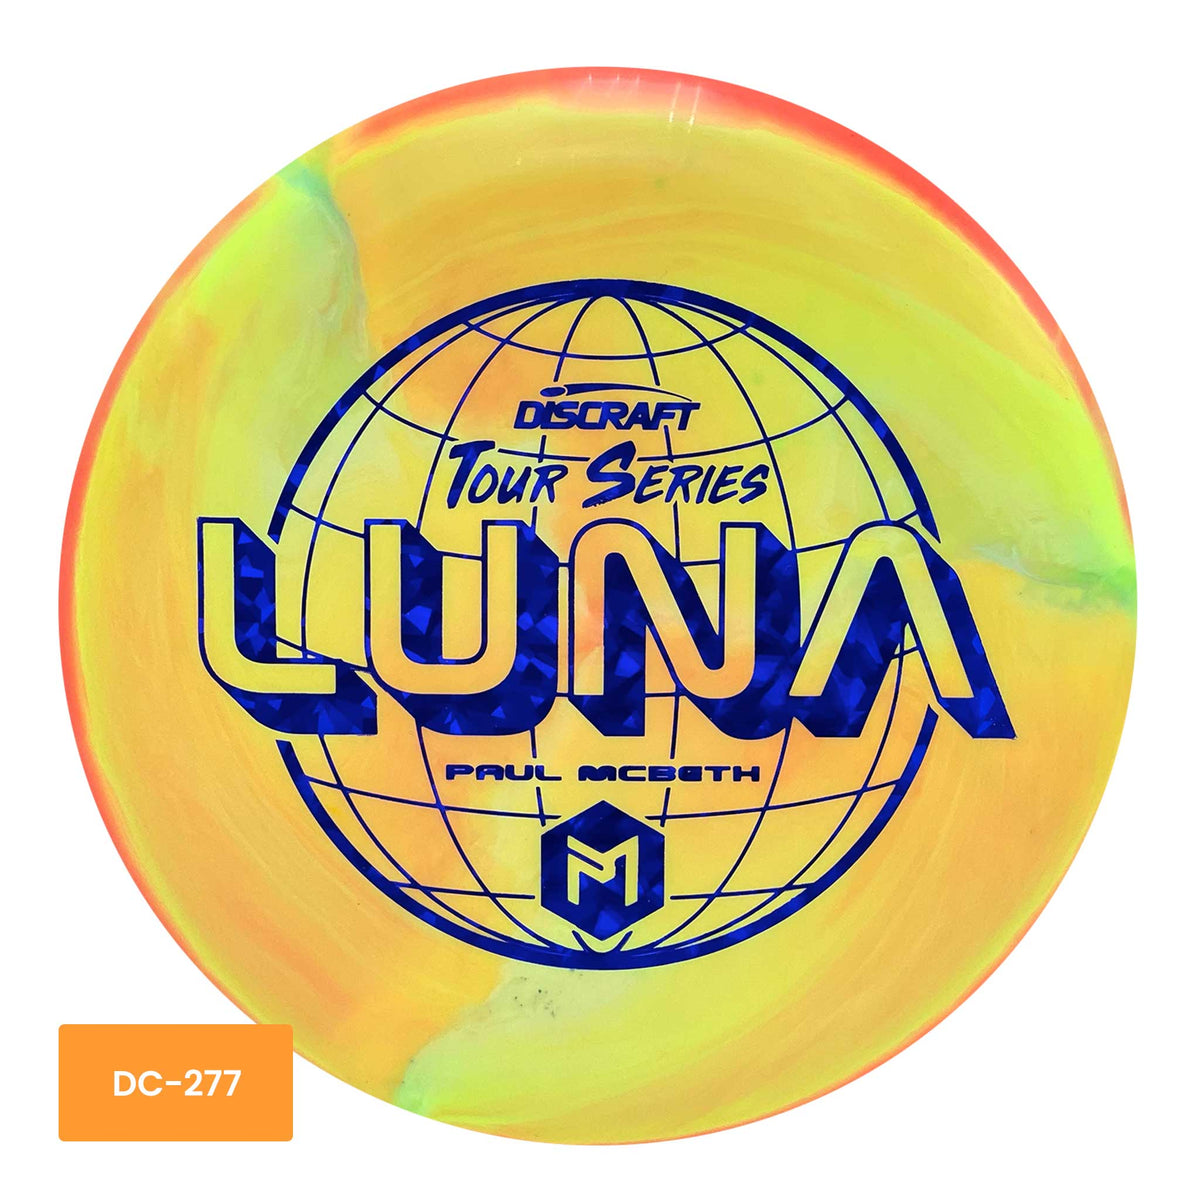 Discraft Paul McBeth 2022 Tour Series Luna putter and approach - Yellow